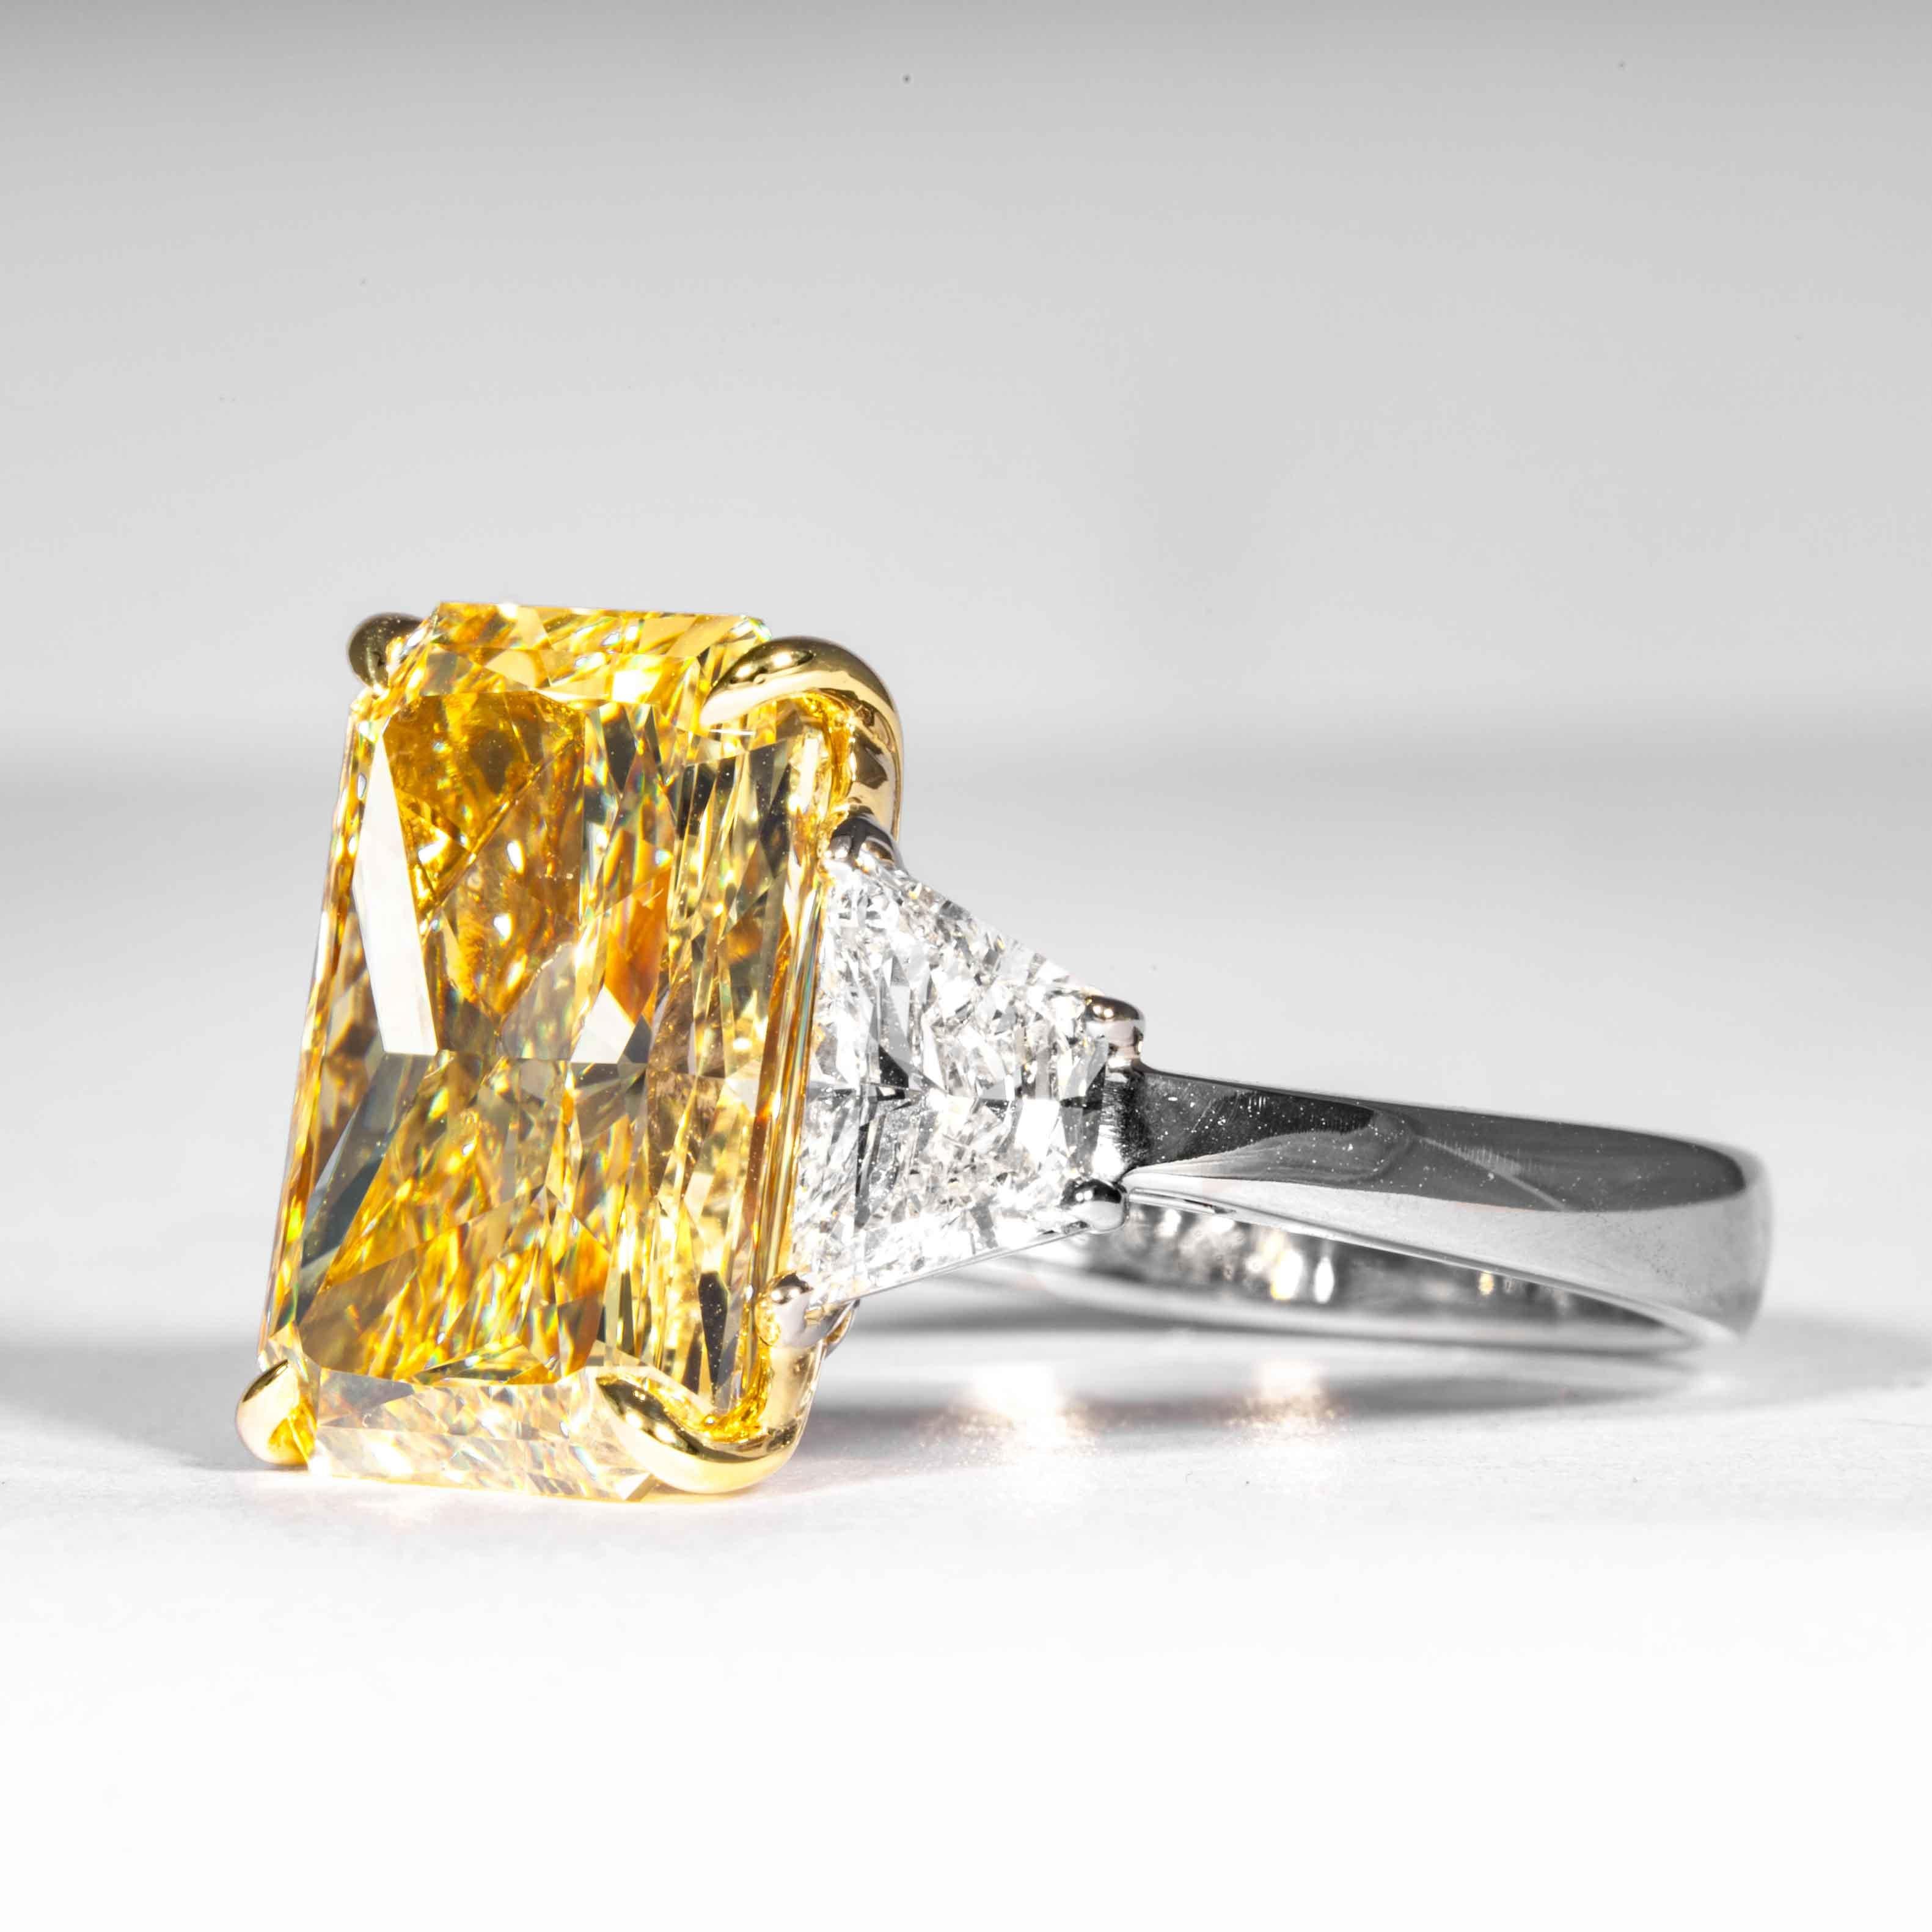 elongated radiant cut diamond ring